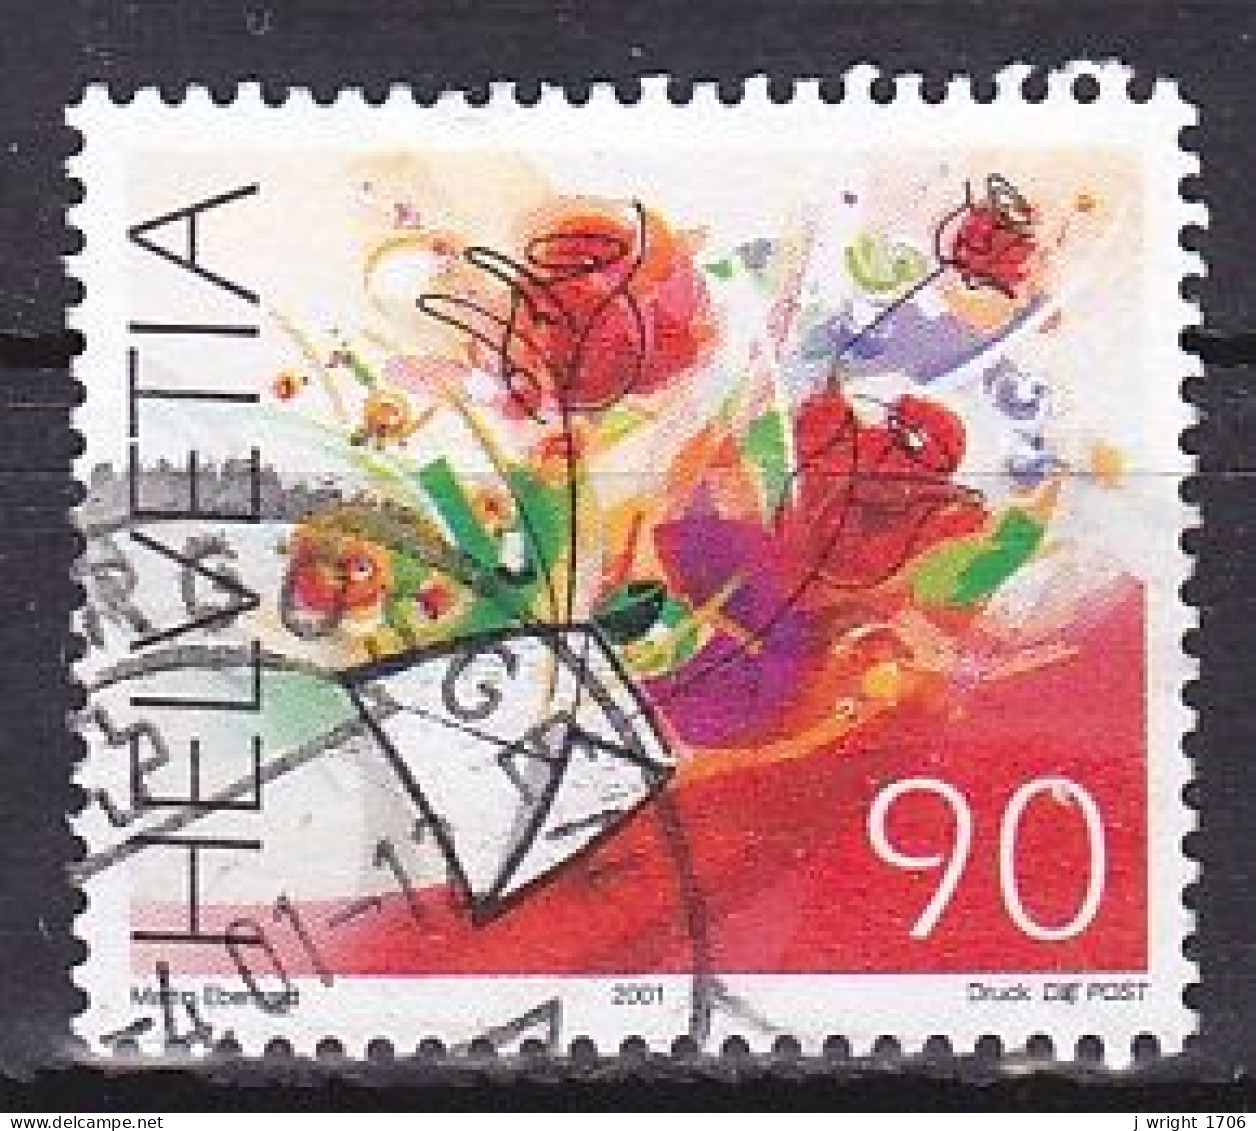 Switzerland, 2001, Congratulations Greetings Stamp, 90c, USED - Usati